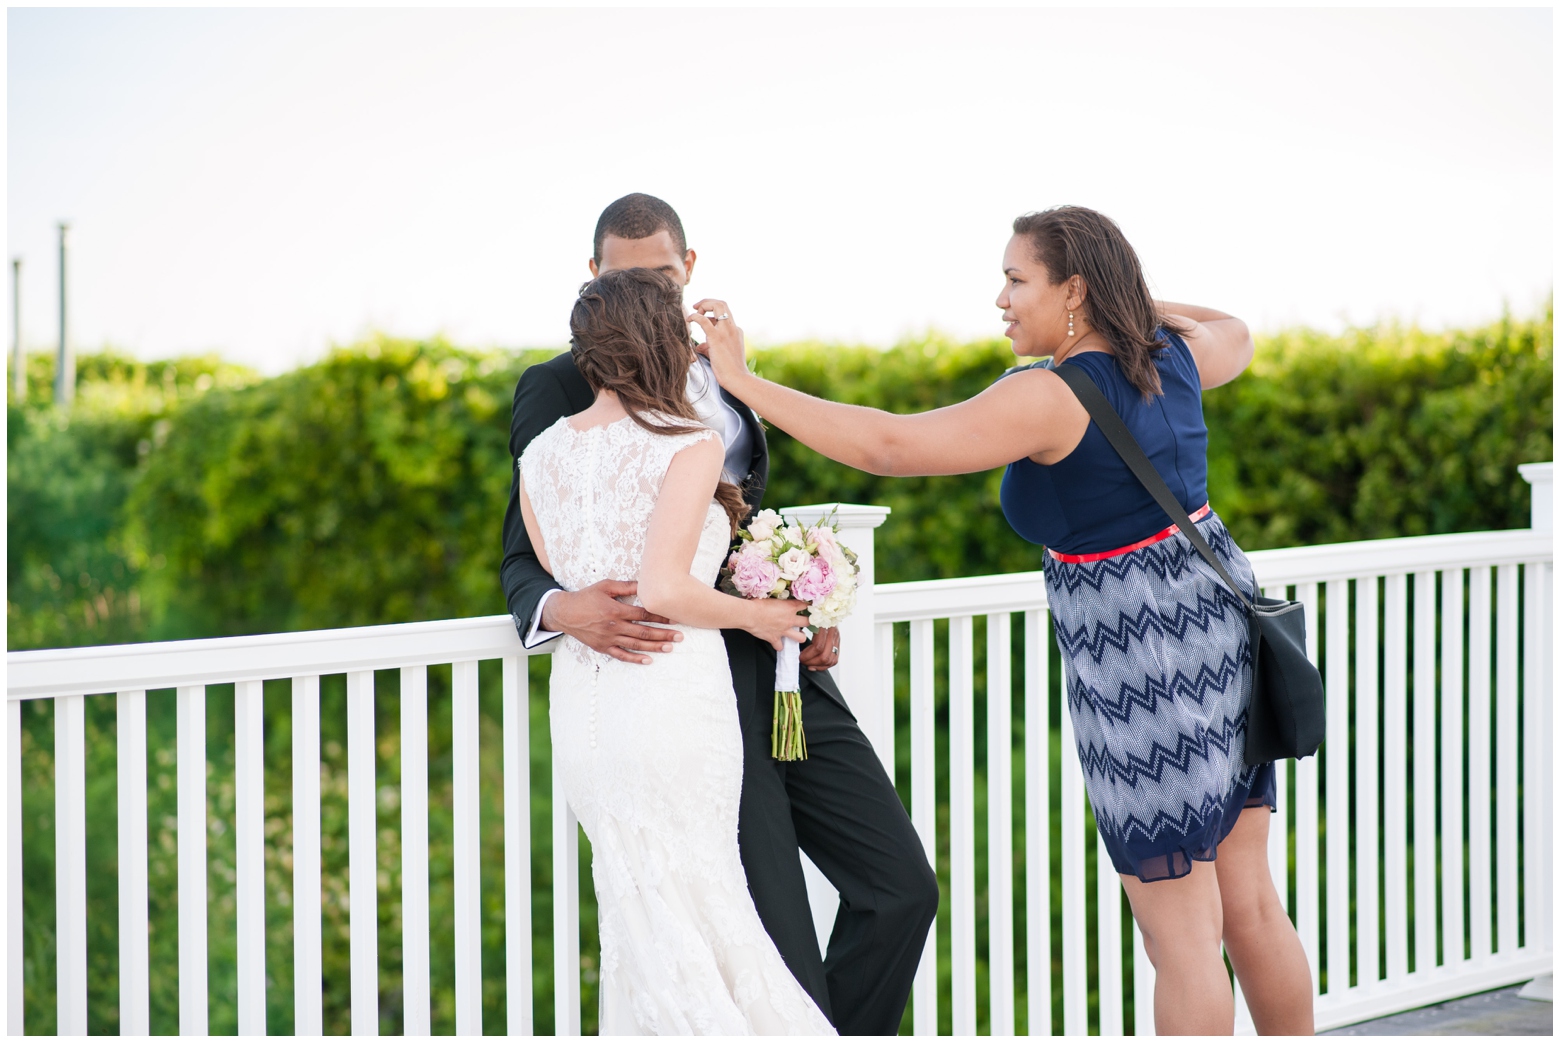 Angie McPherson Photography Behind The Scenes Photos Hampton Roads Wedding 2015_0049